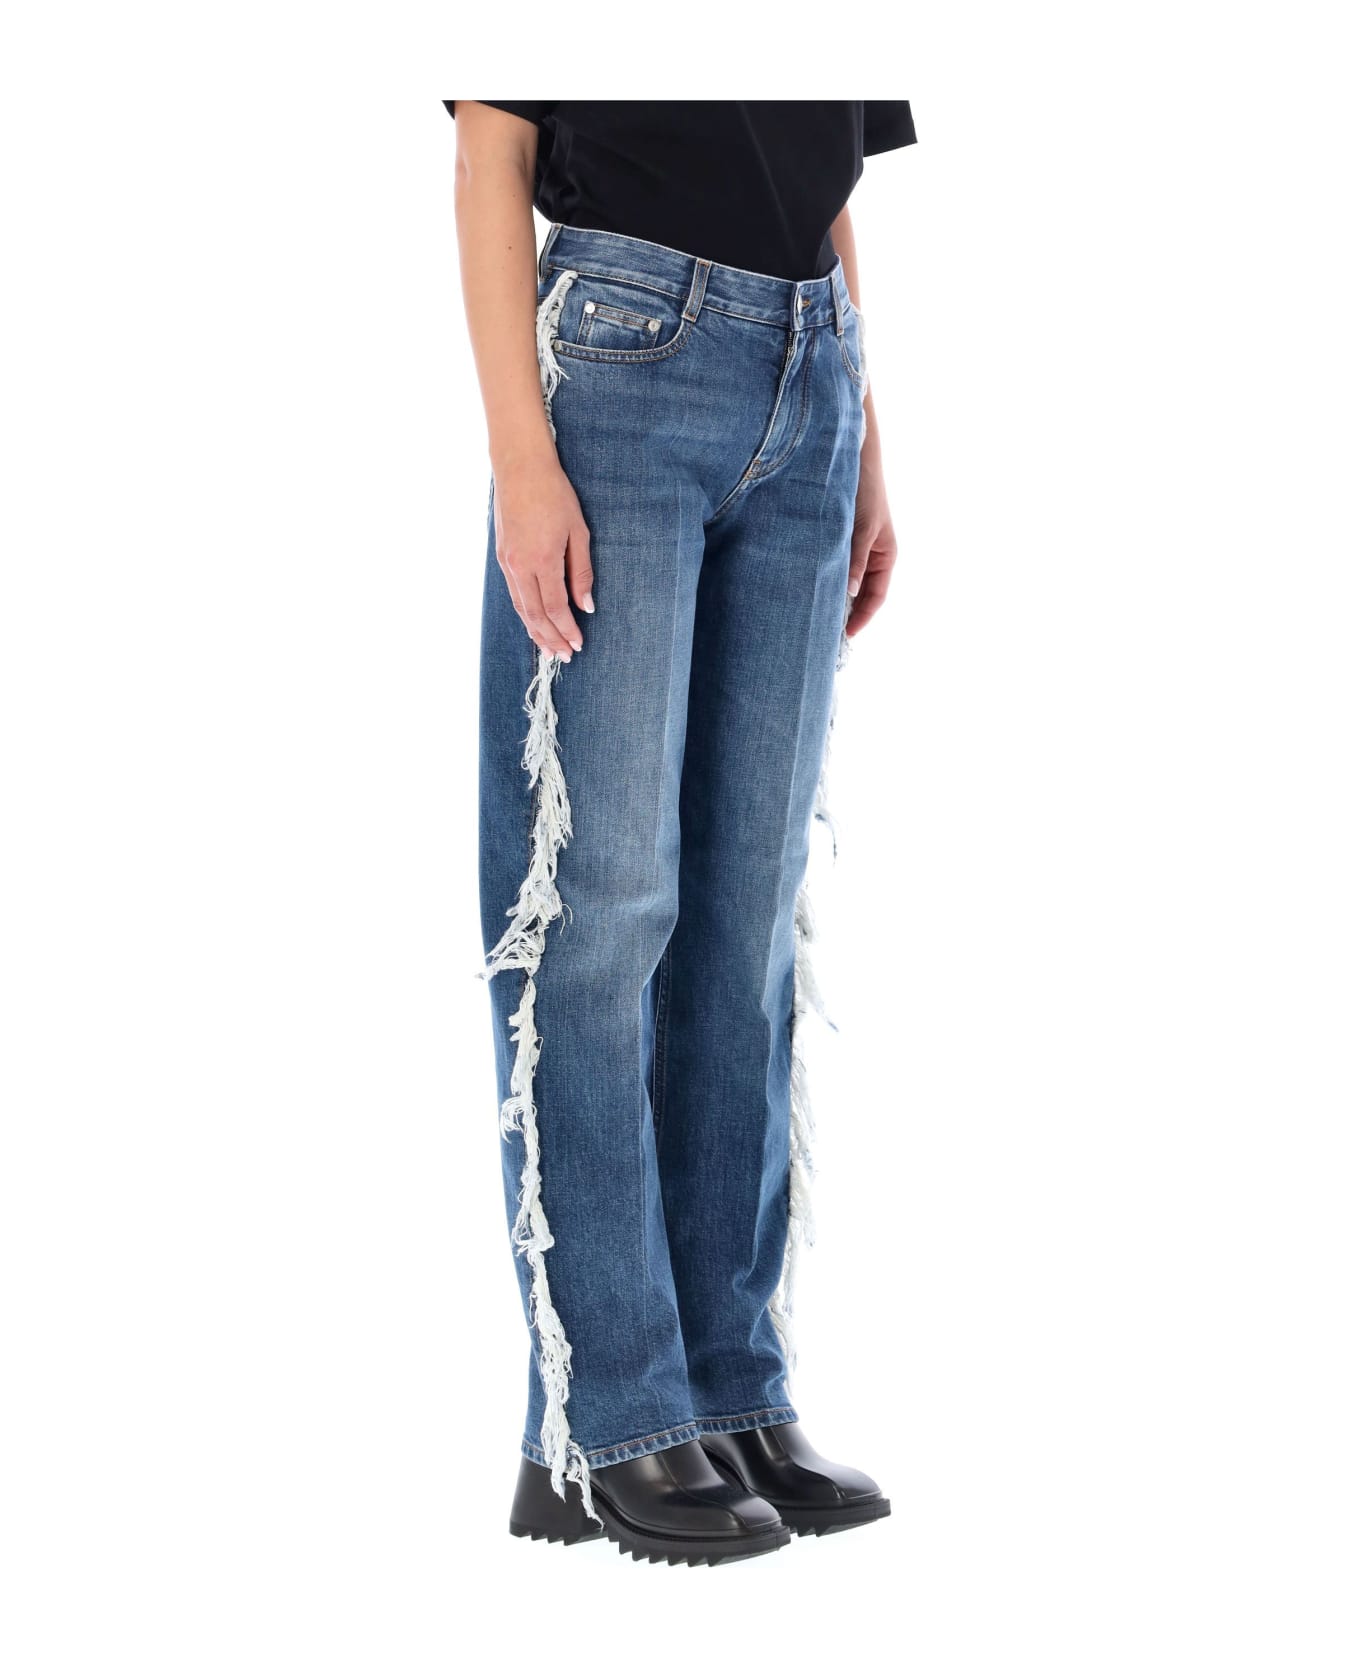 Stella McCartney Fringed Straight Leg Jeans - VINTAGE DARK